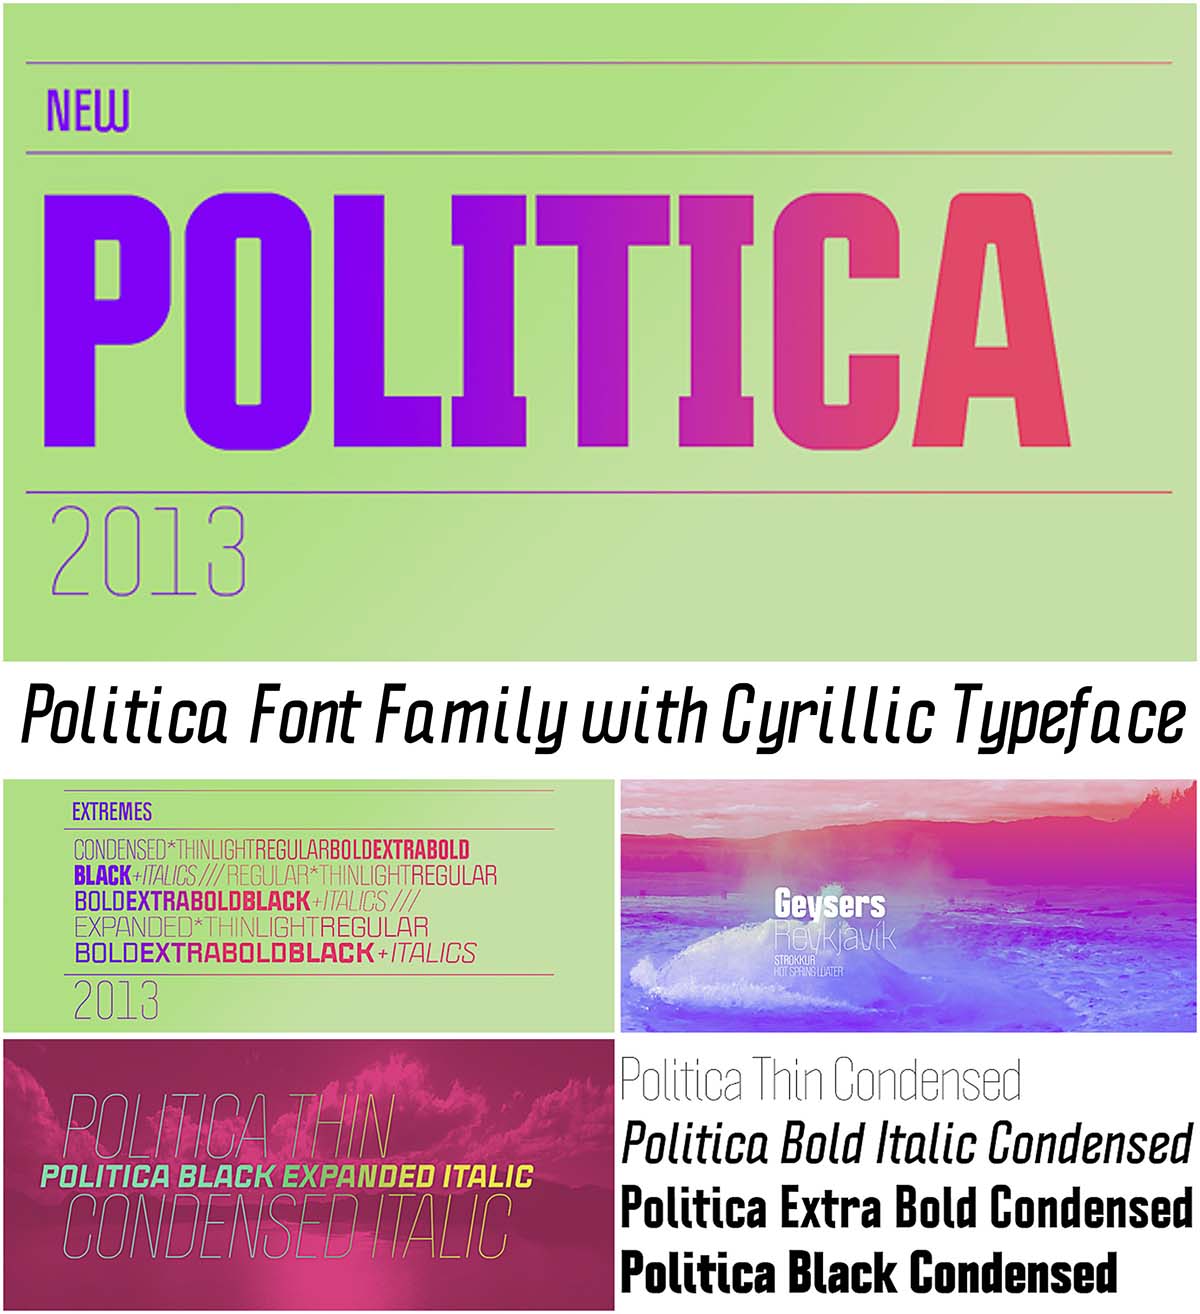 Politica font family cyrillic typeface